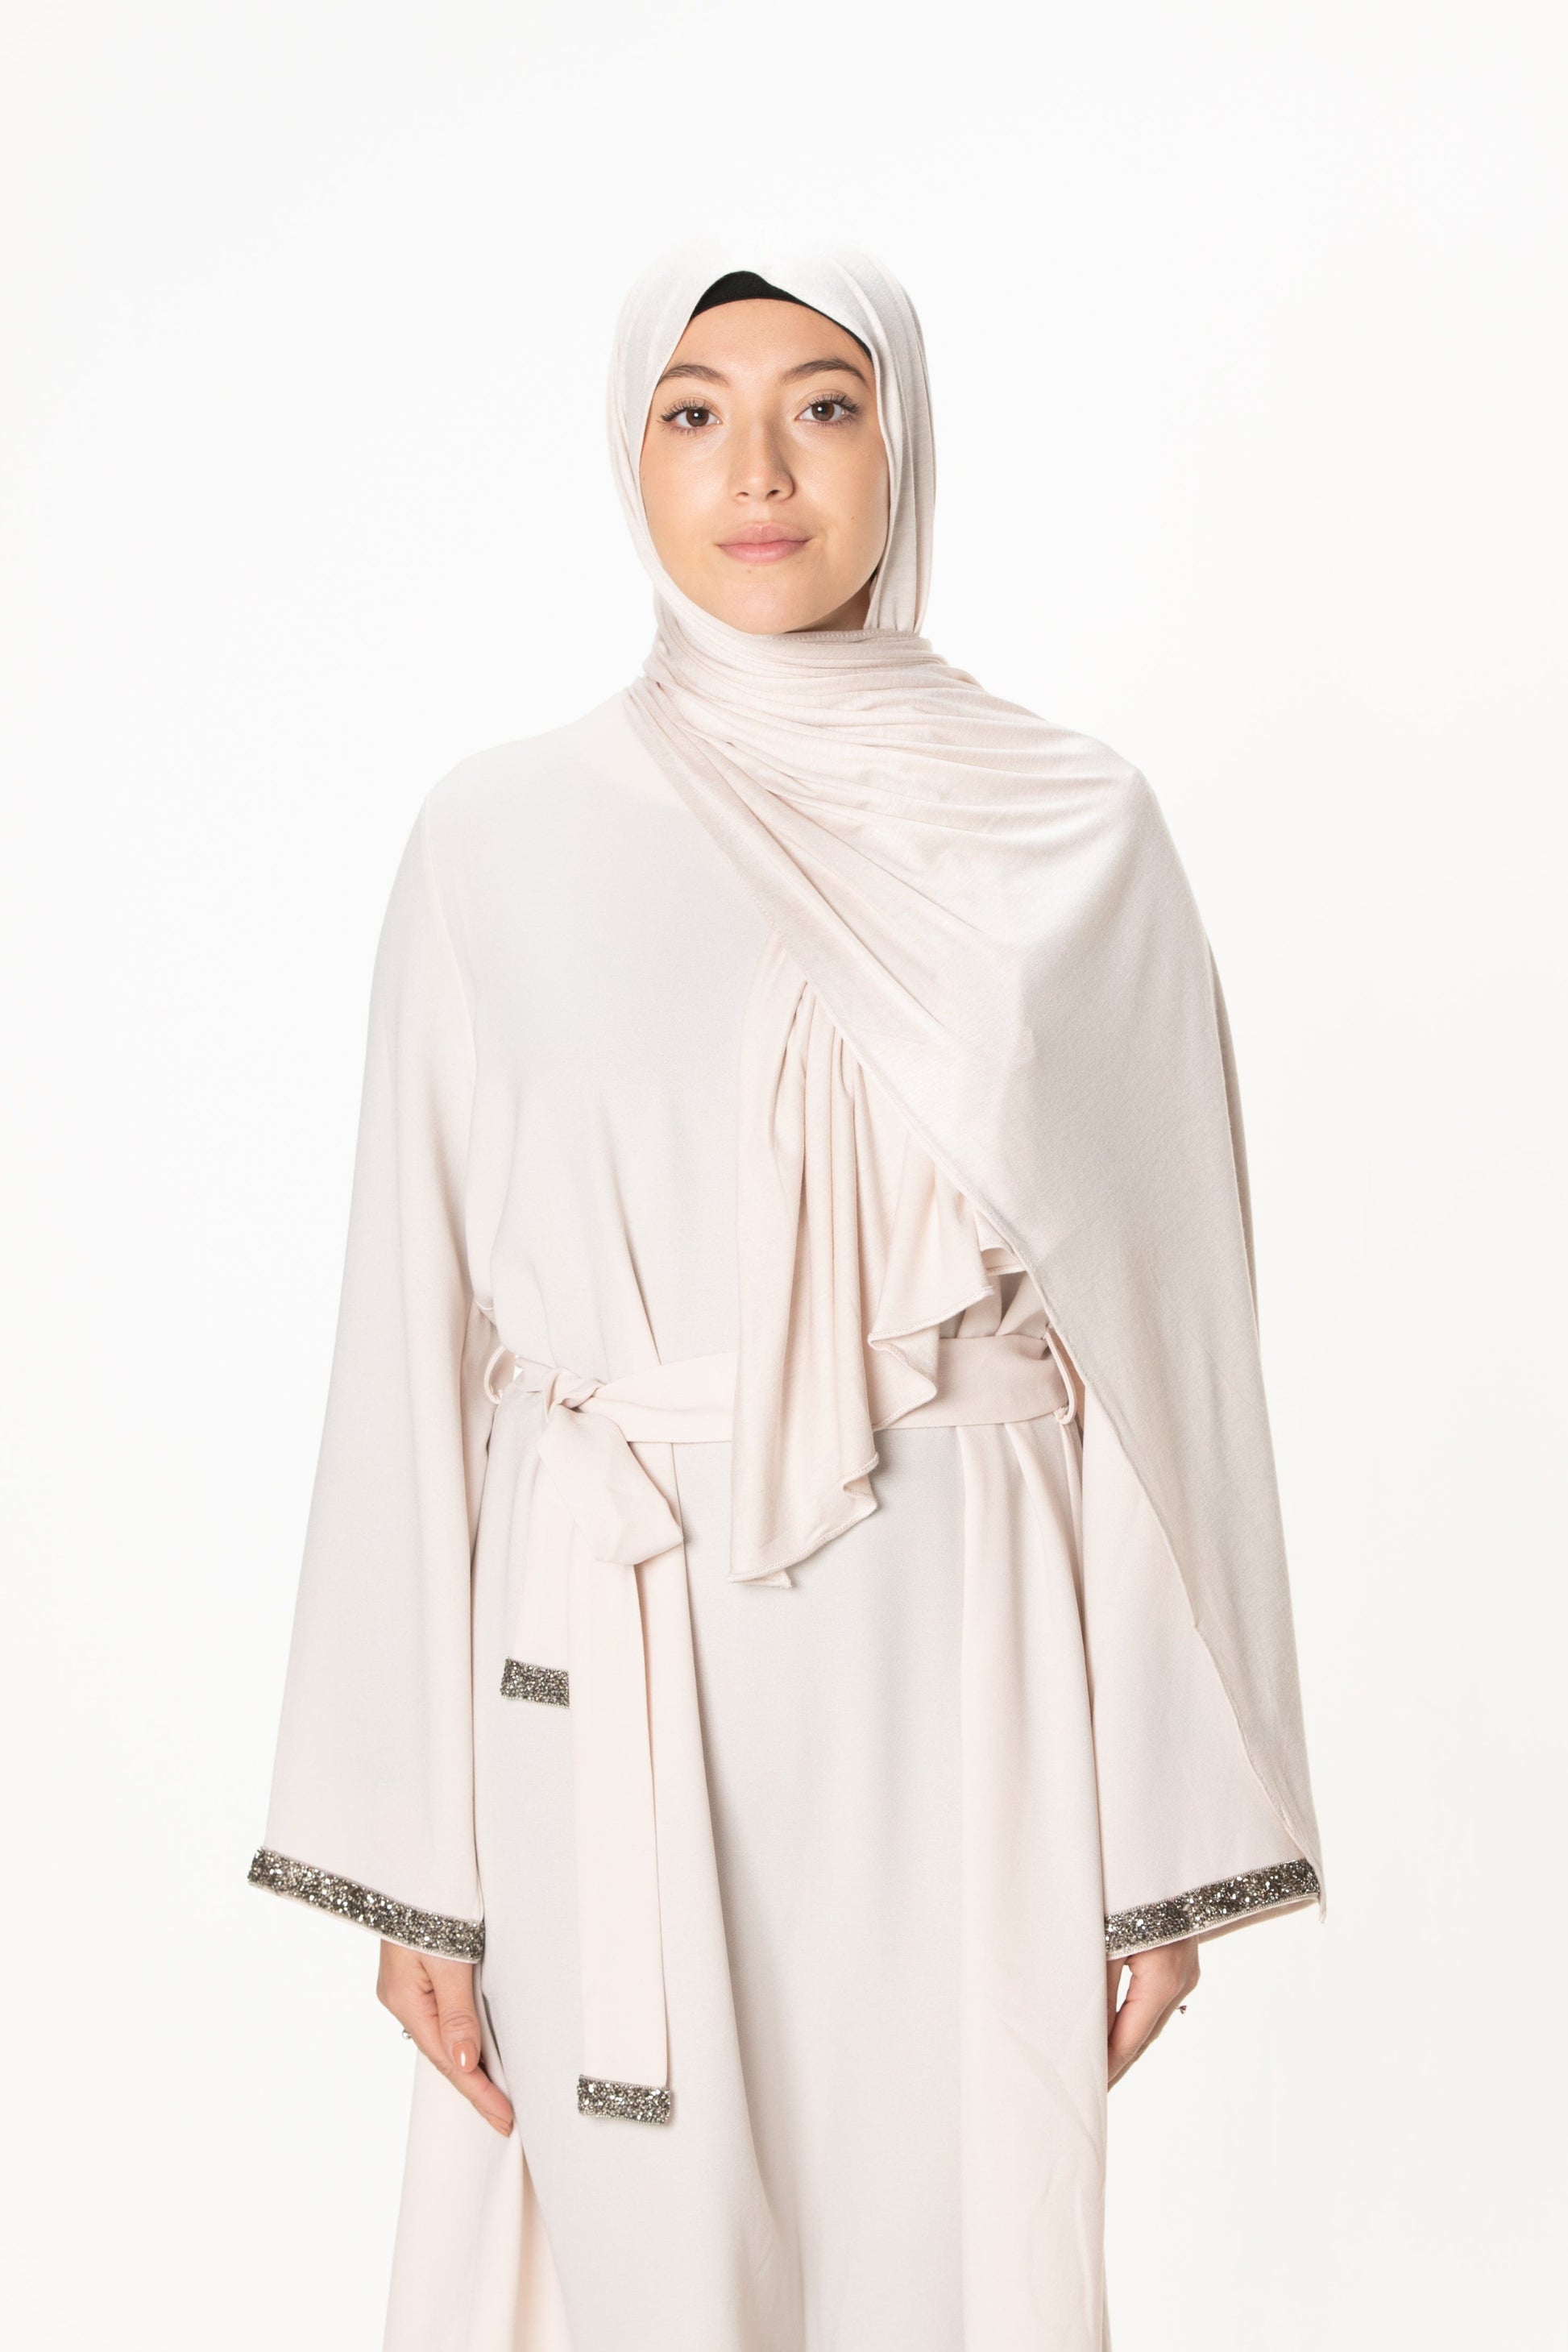 jolienisa Premium Jersey  Cotton Hijab  Nice Cream